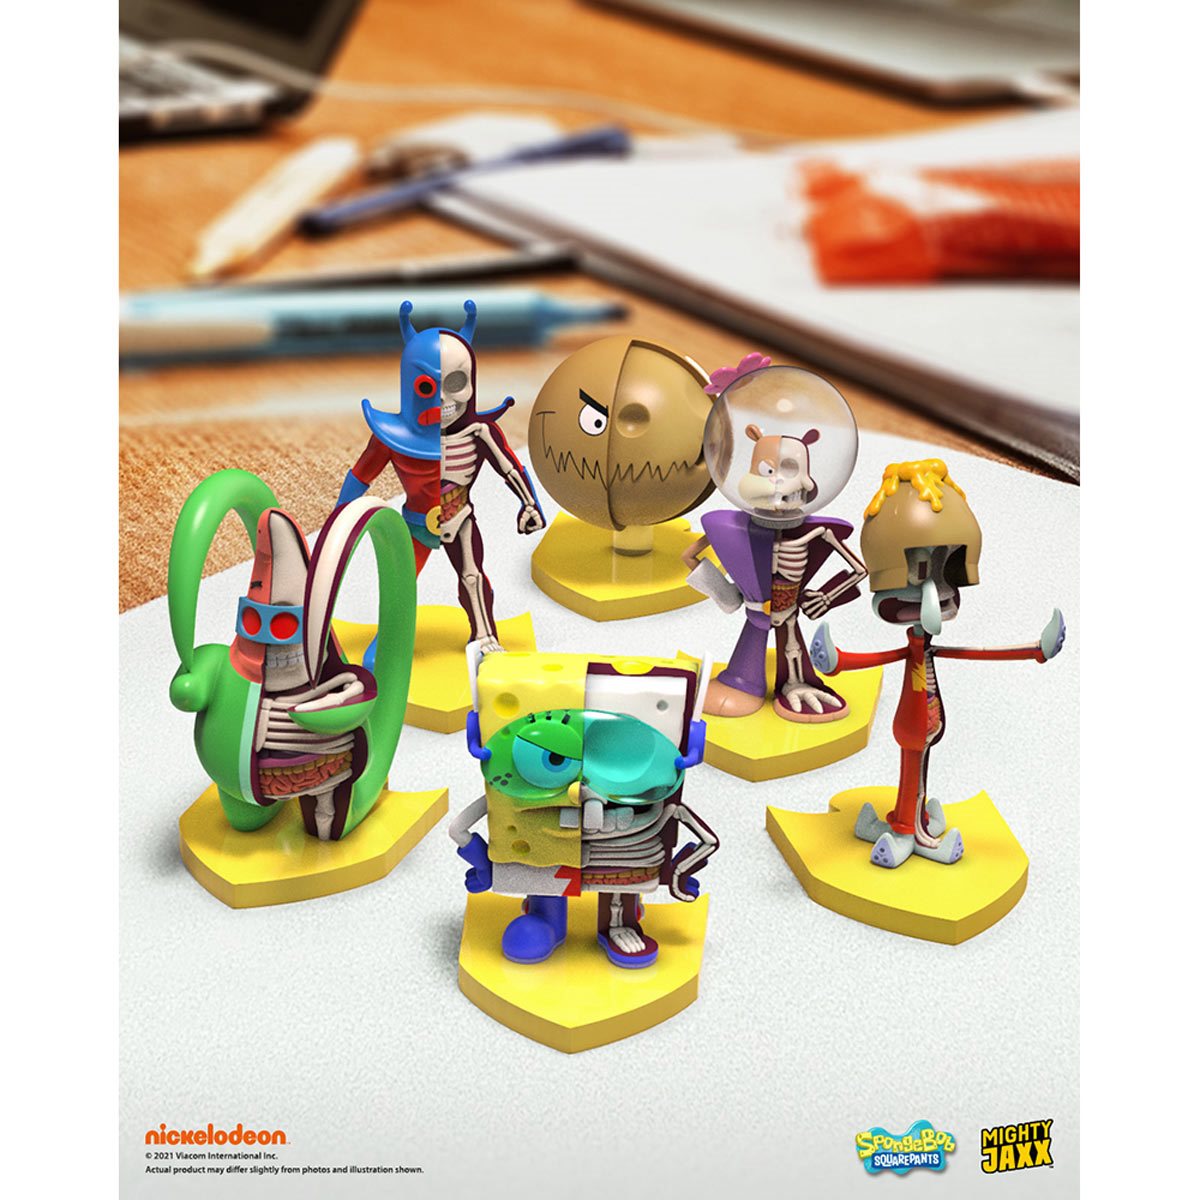 Mighty Jaxx Hidden Dissectibles Spongebob SquarePants Blind Box (series 4 - Super Edition)